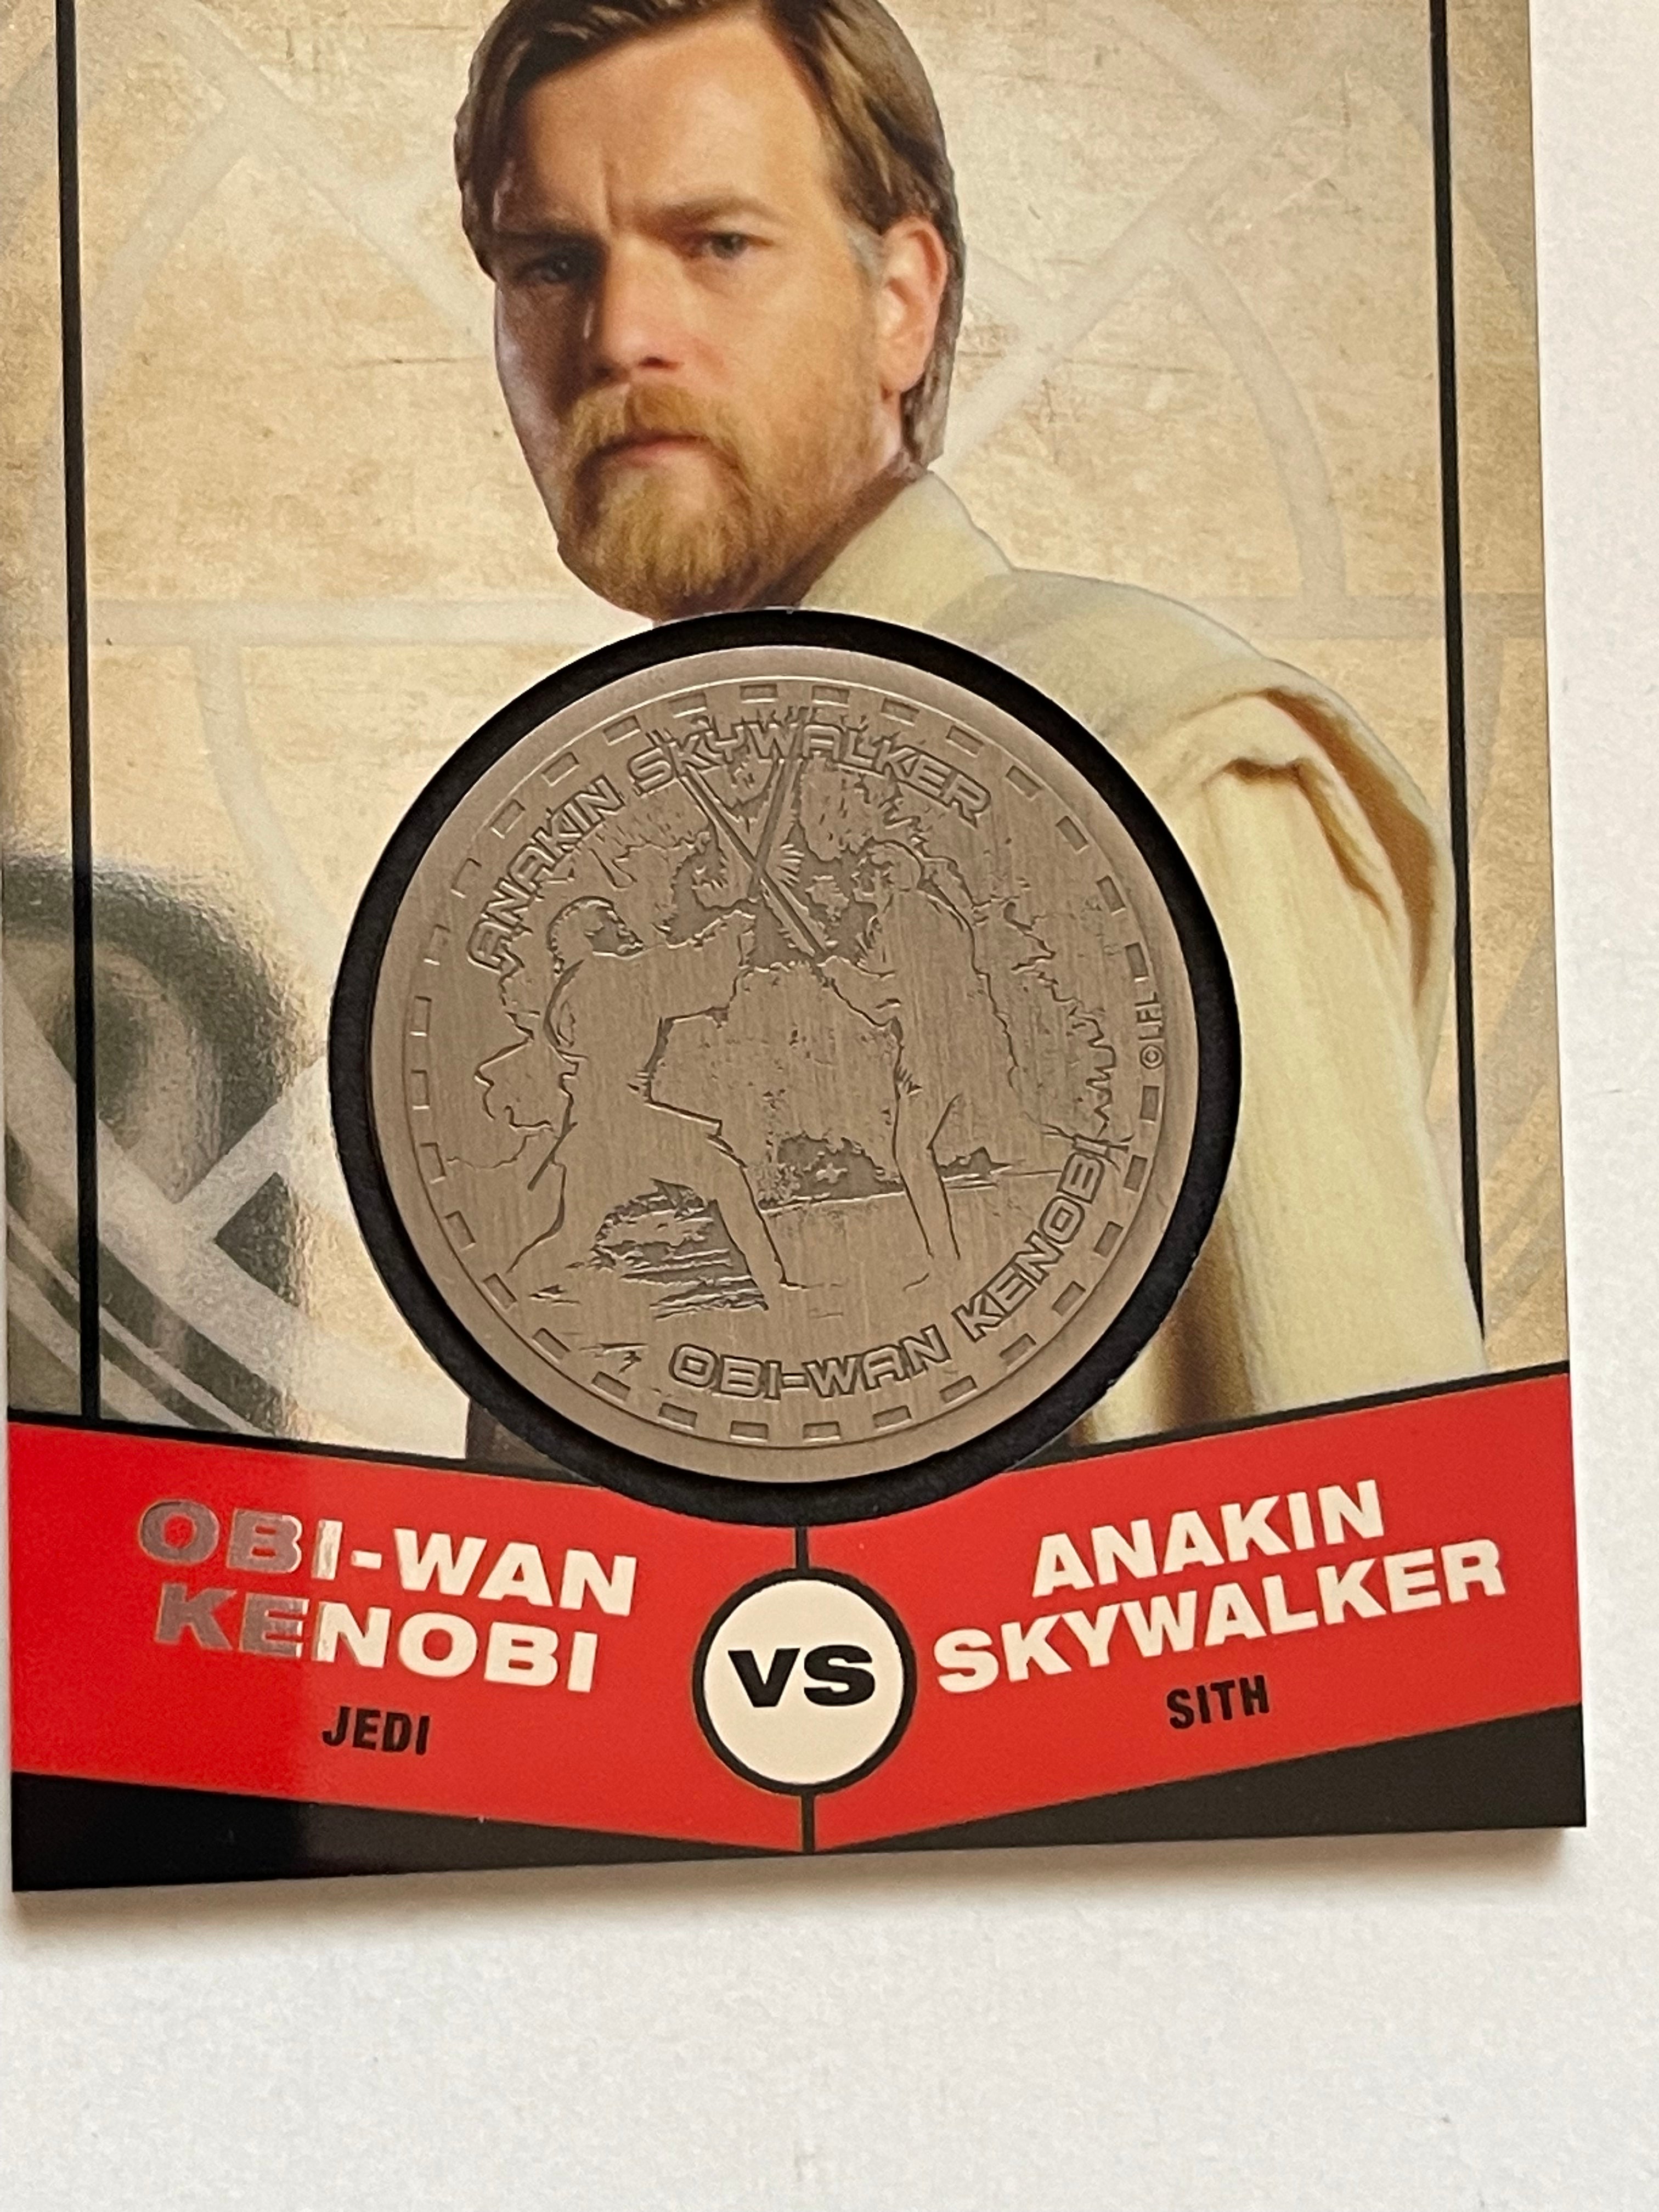 Star Wars Obi-wan vs Anakin rare numbered medallion insert card